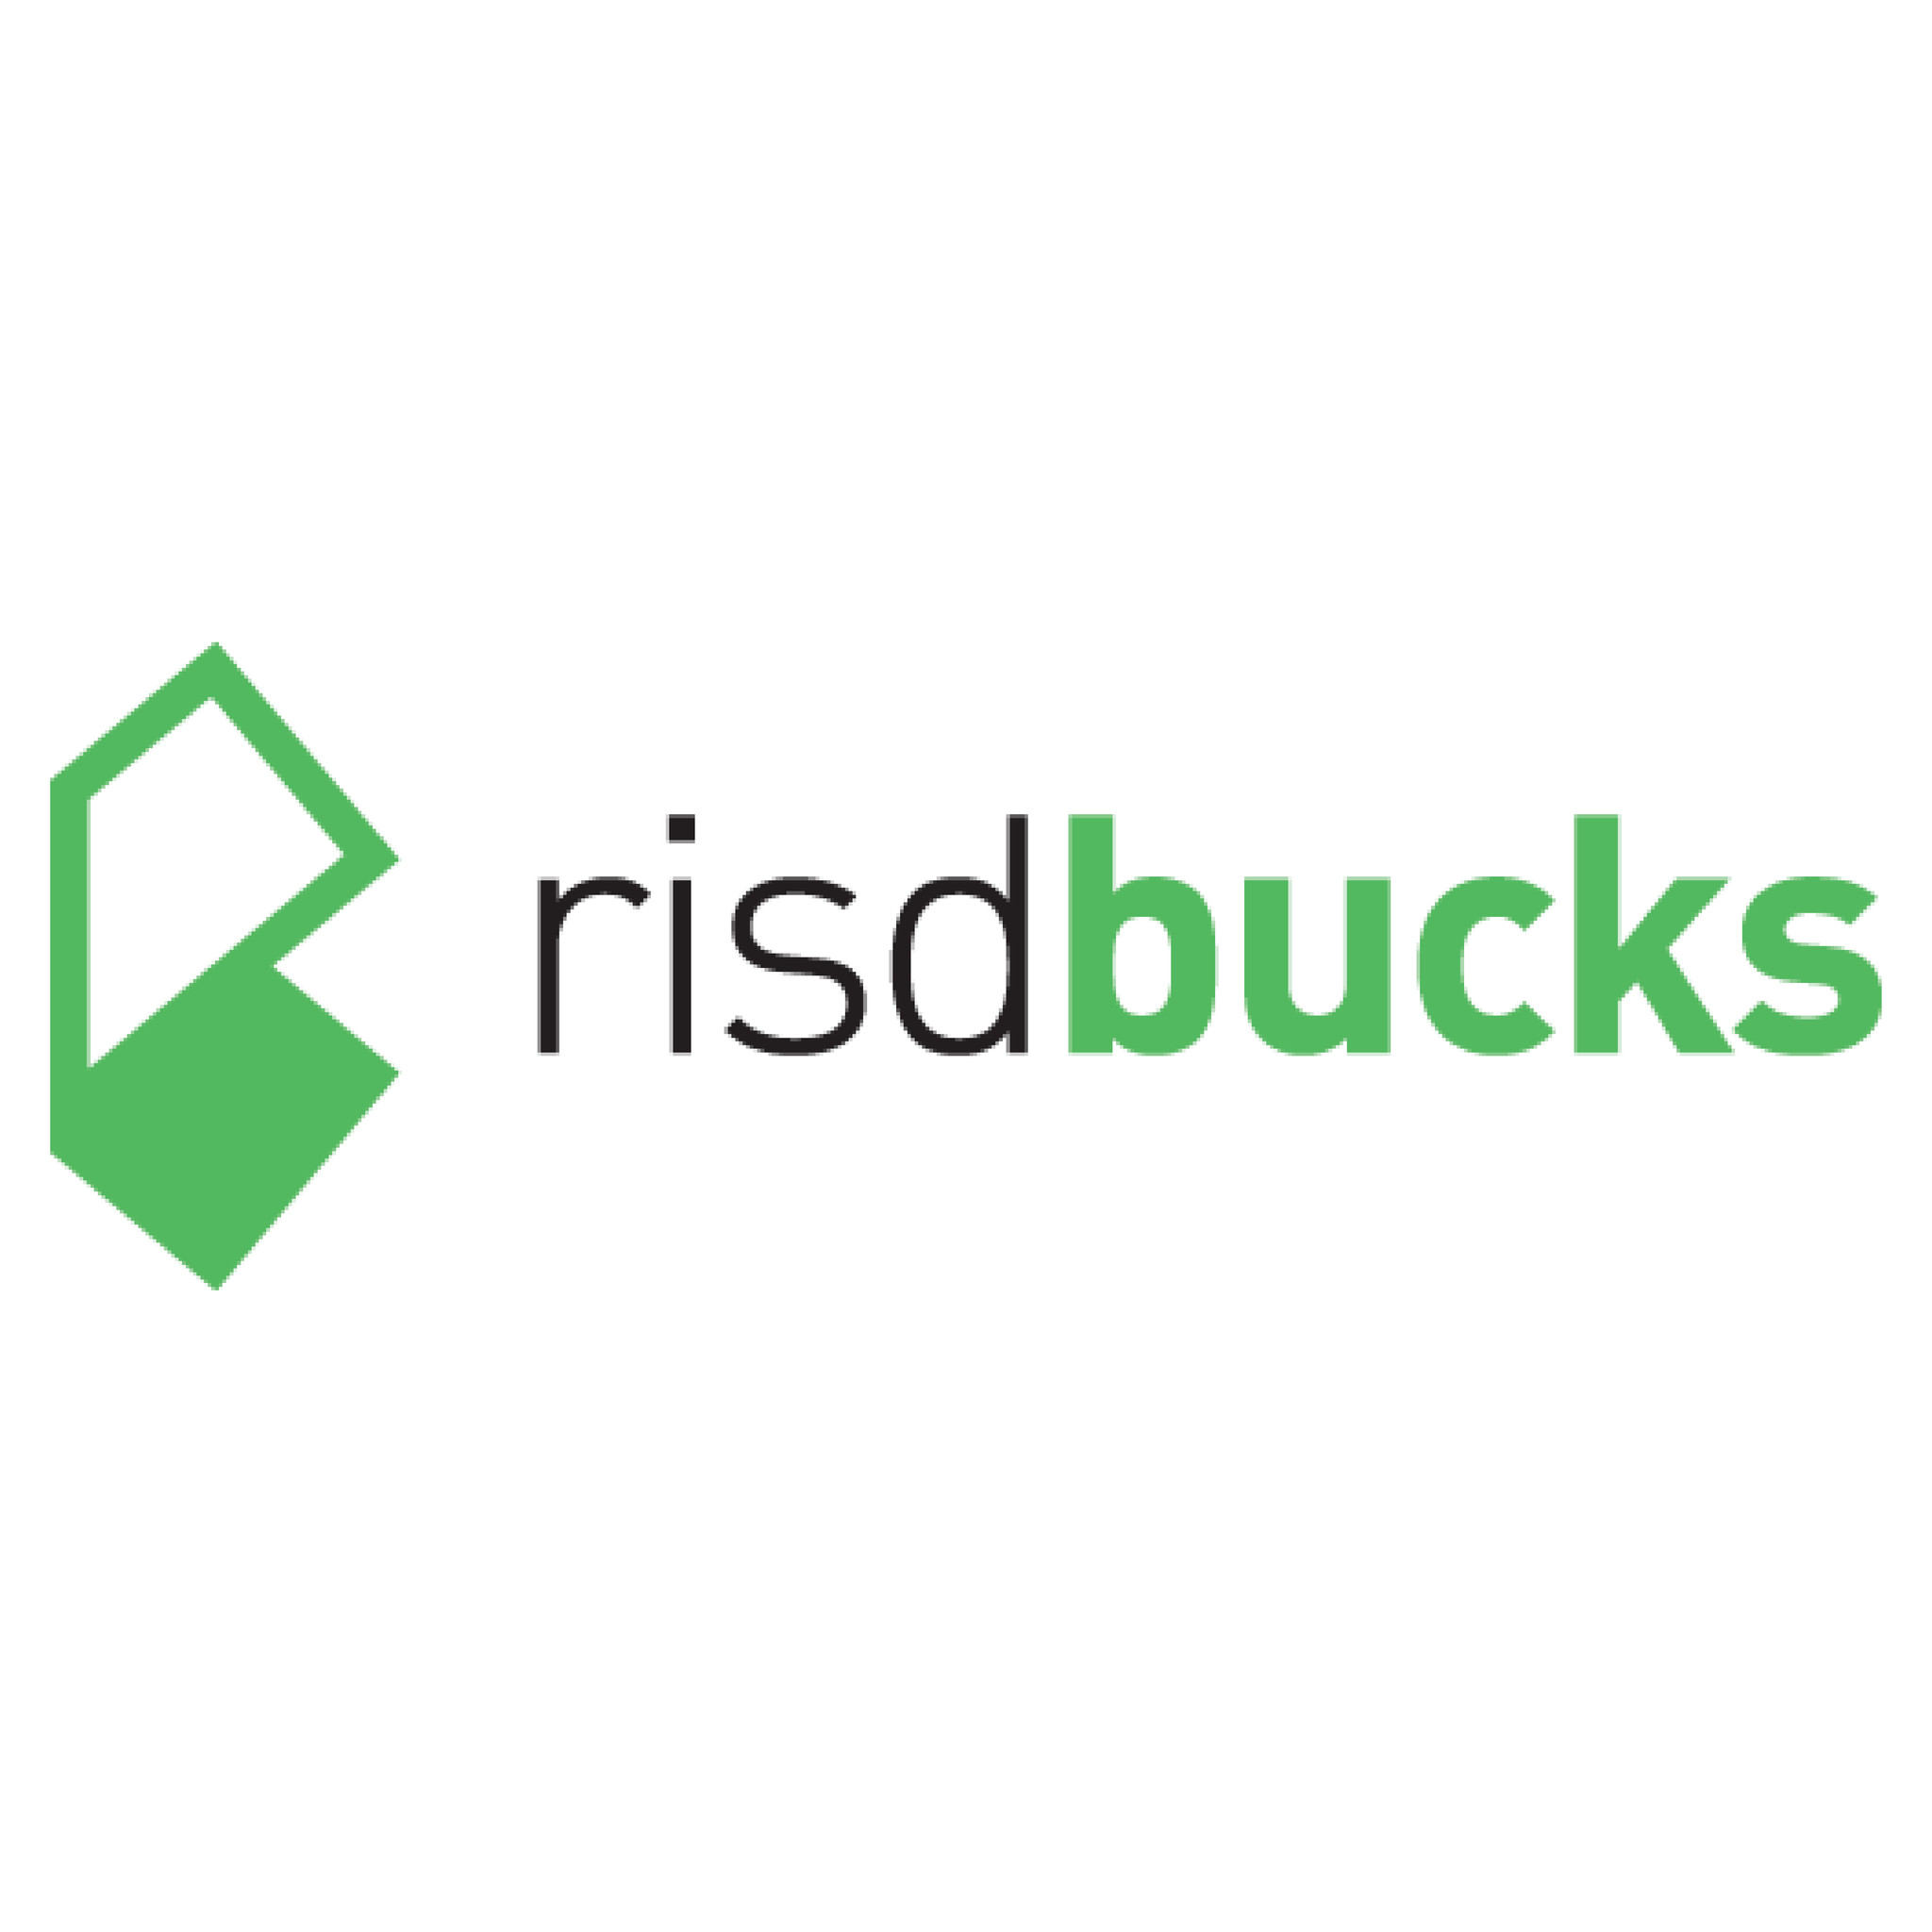 RISD Bucks